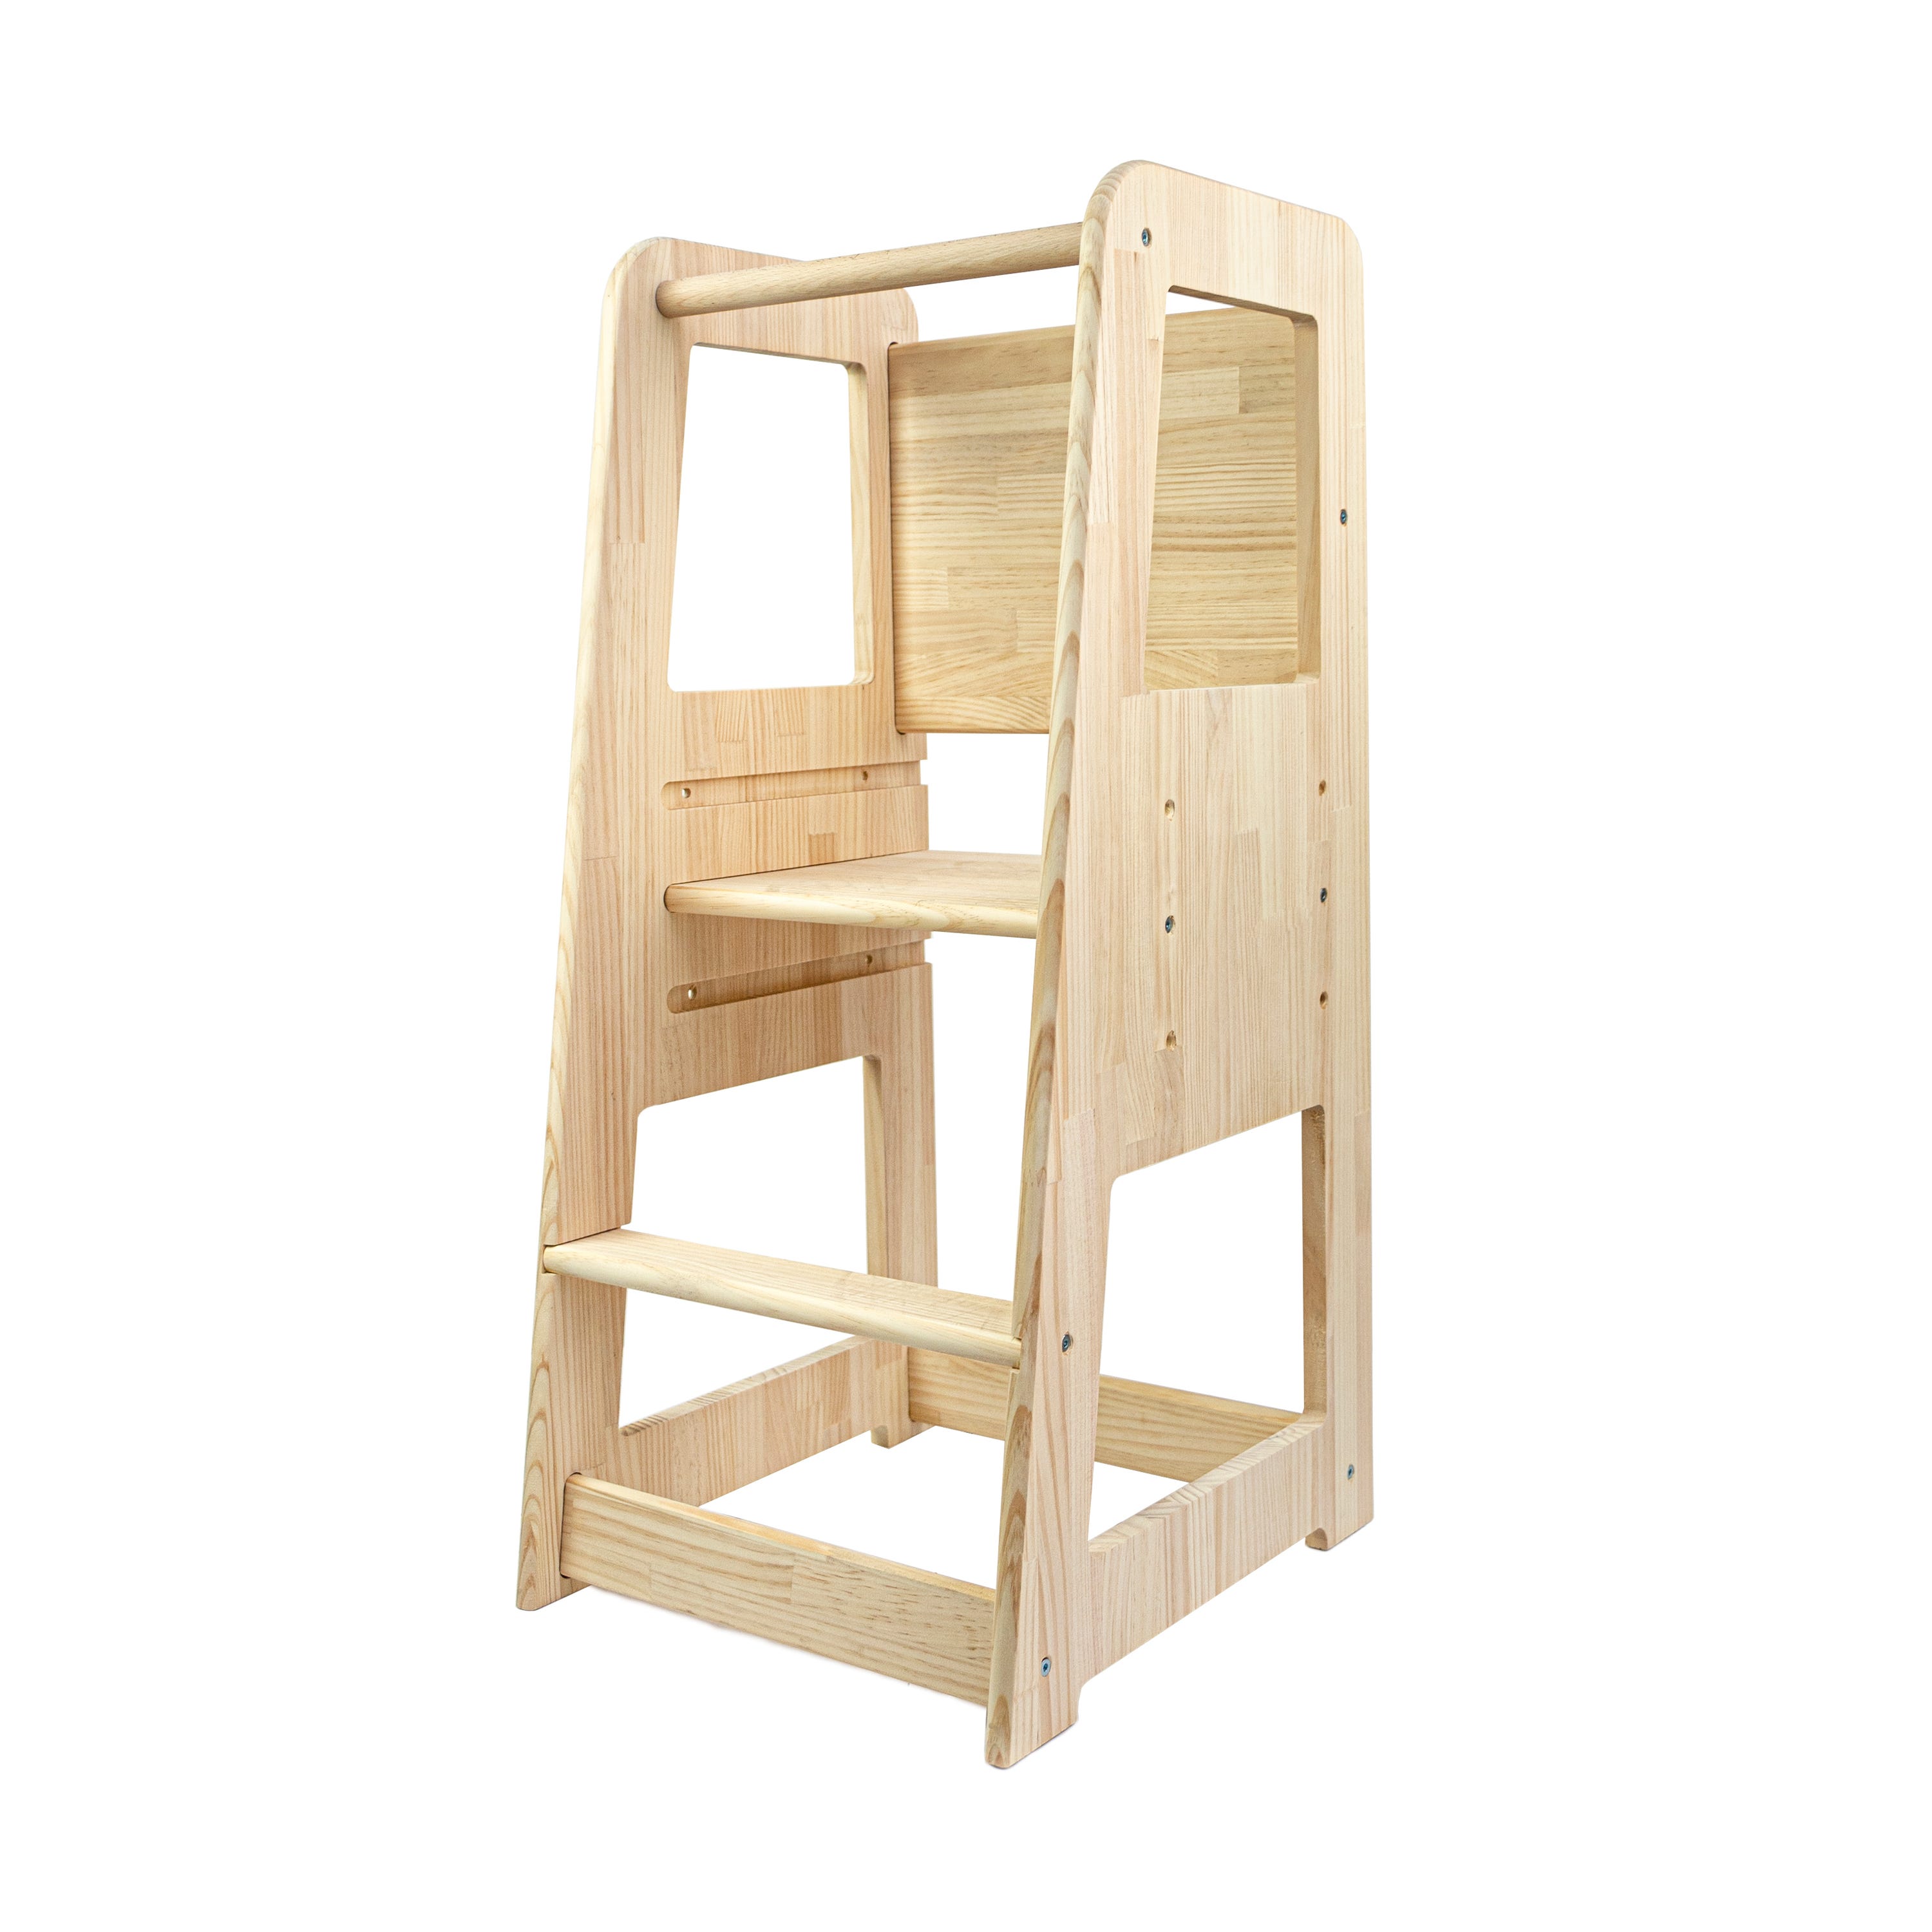 Torre de aprendizaje pino macizo en madera natural Montessori.